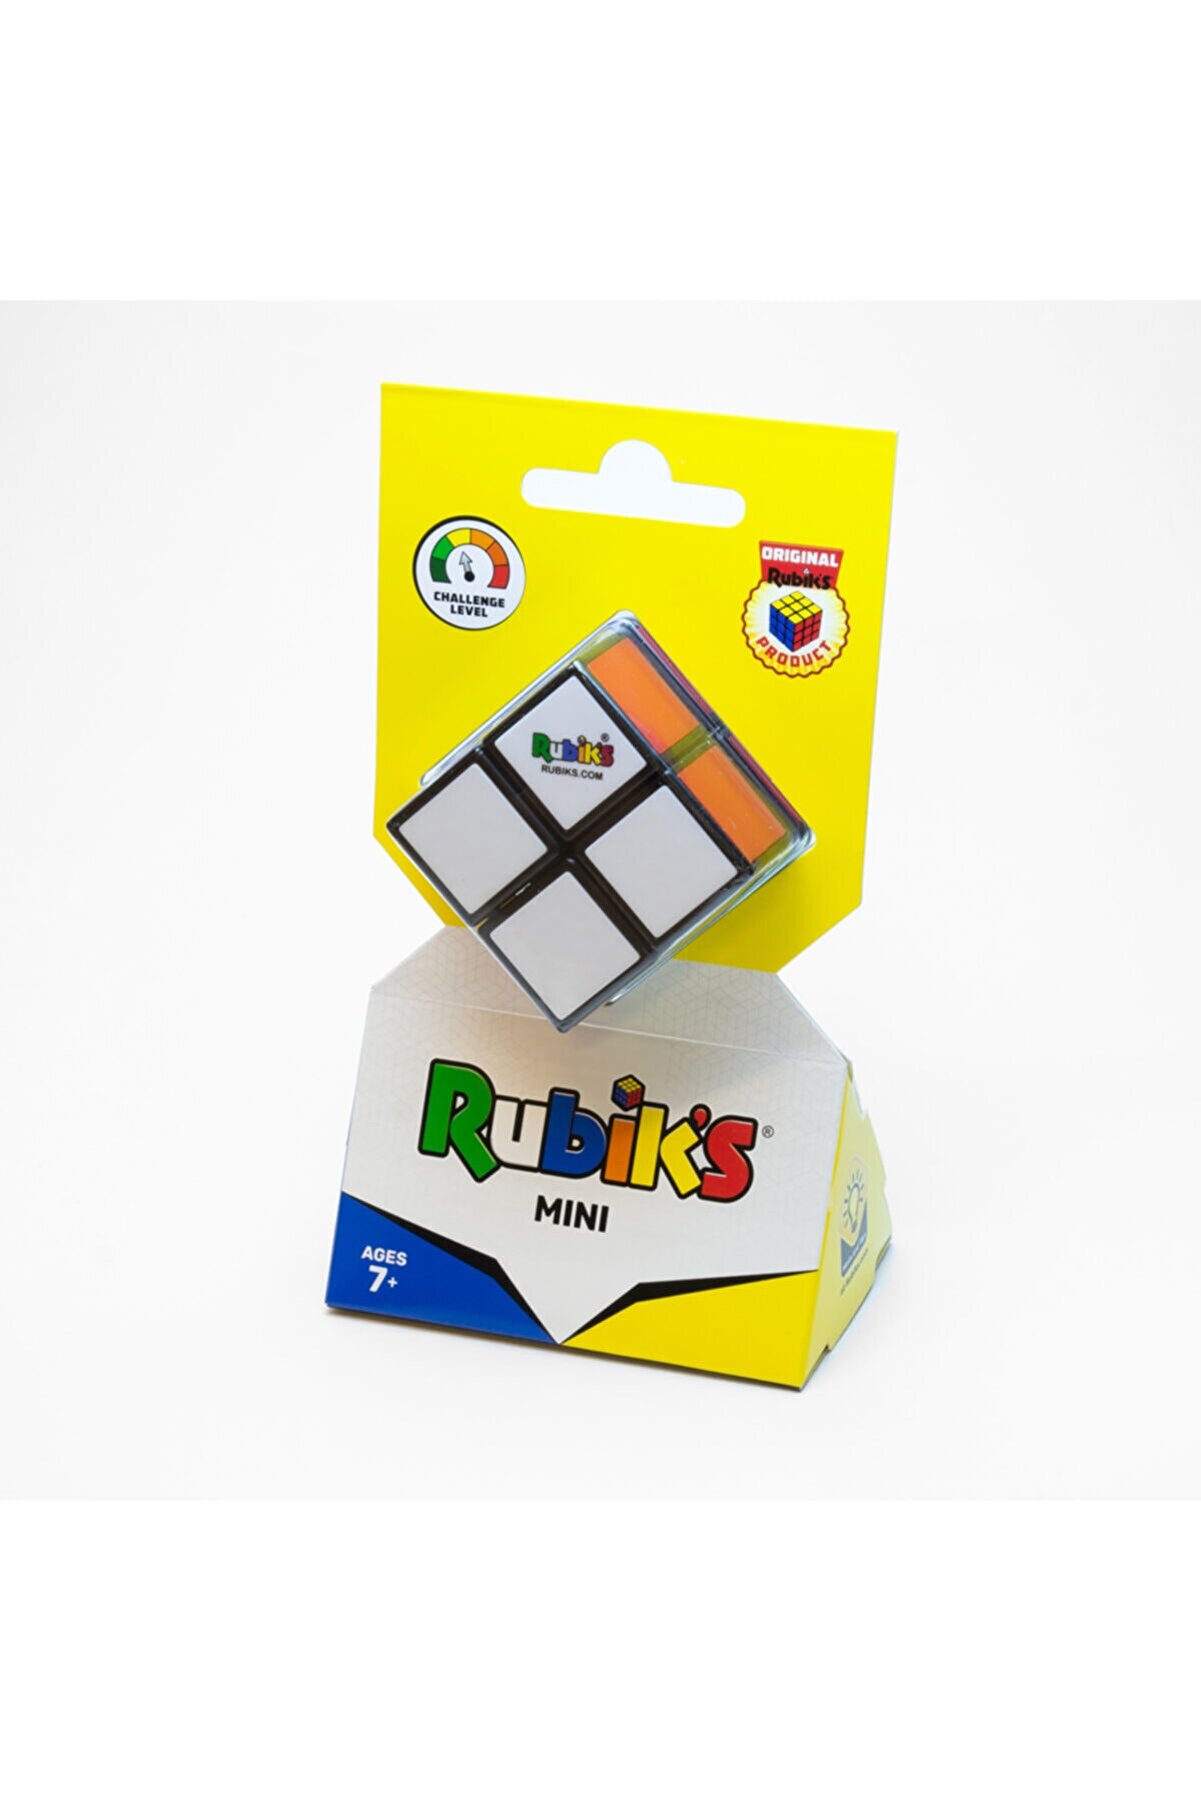 Rubiks Rubik's Mini 2 X 2 Cube